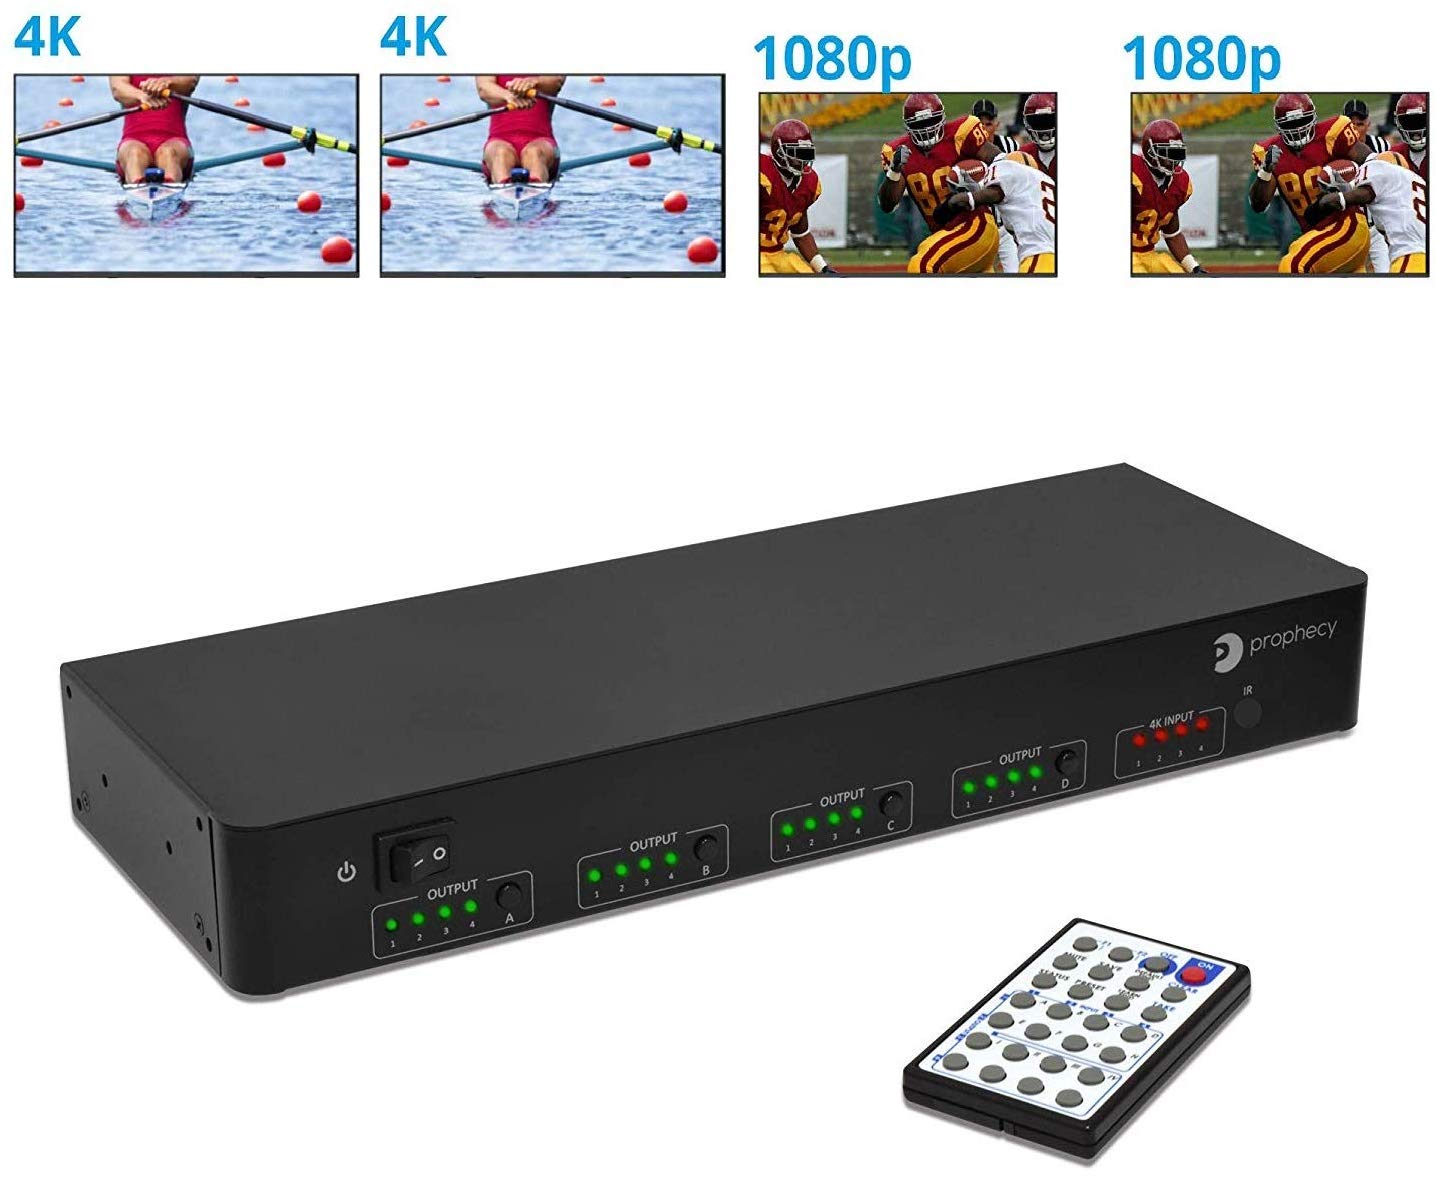 Integrere ukrudtsplante Saucer 4x4 HDMI Matrix w/ Downscaling Resolution (4K HDR) | gofanco